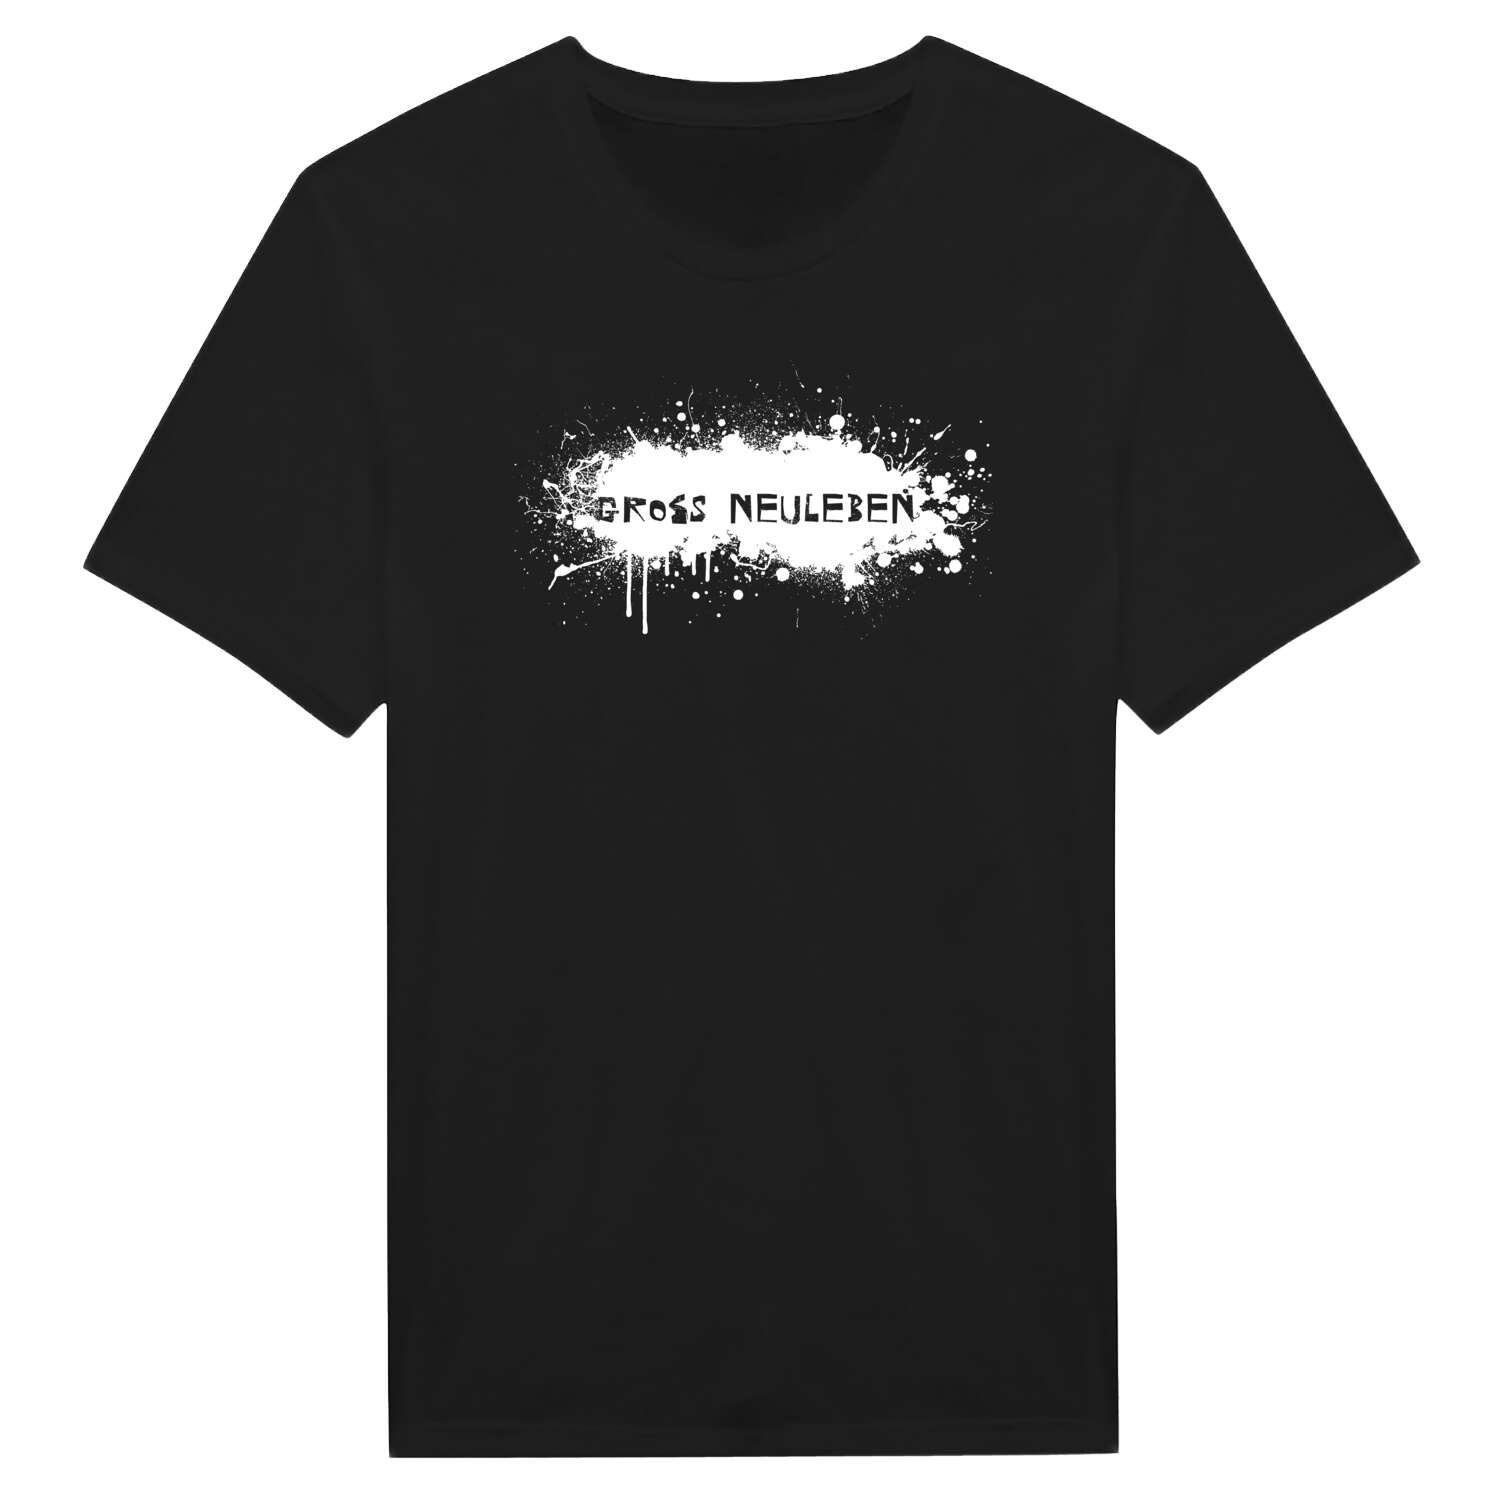 Groß Neuleben T-Shirt »Paint Splash Punk«